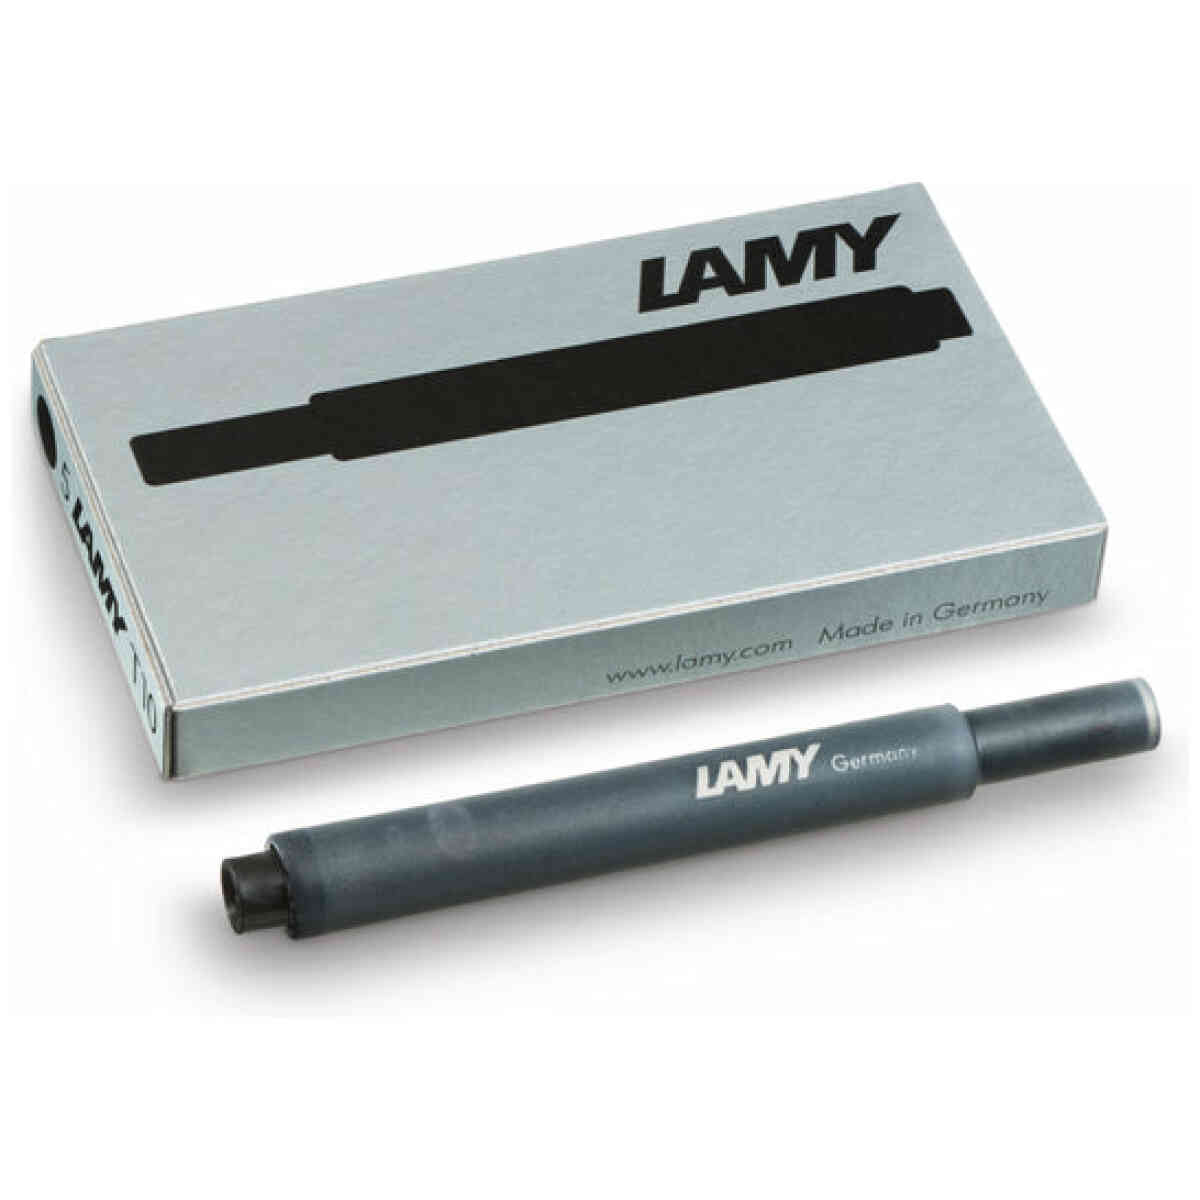 Lamy T10 Ink cardrige black